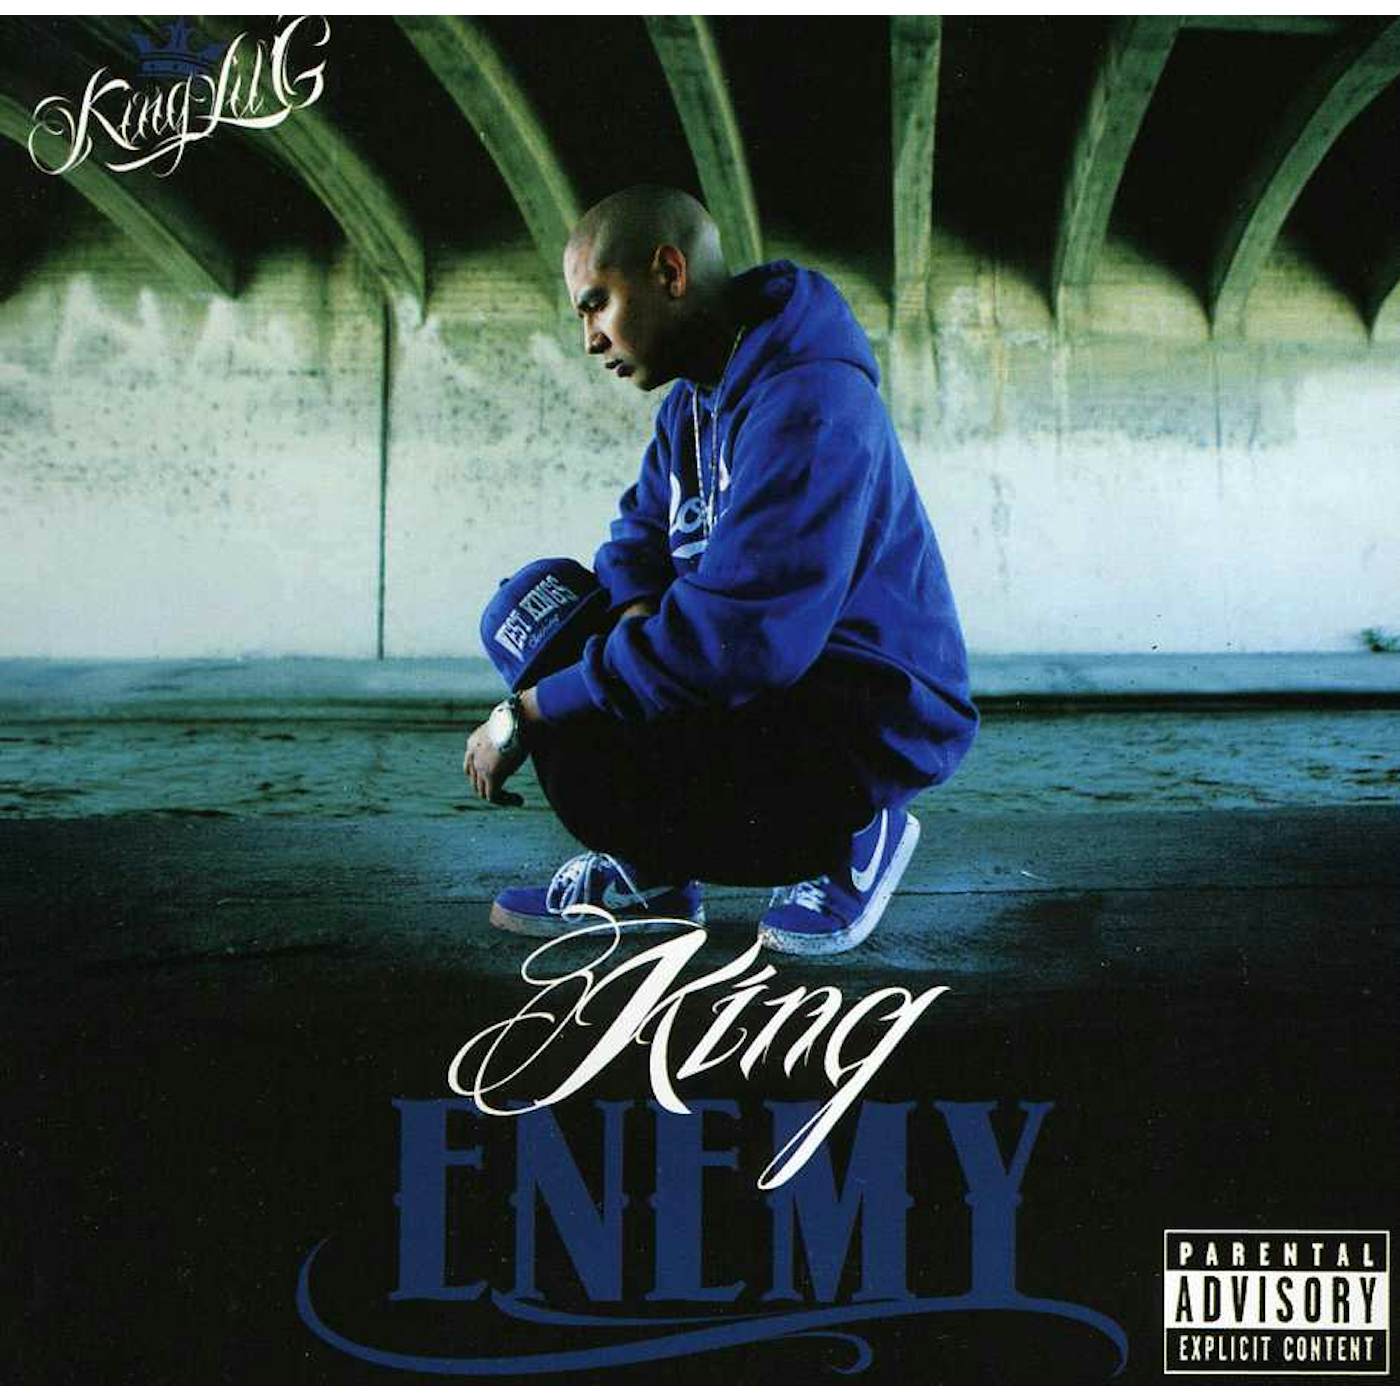 King Lil G KING ENEMY CD